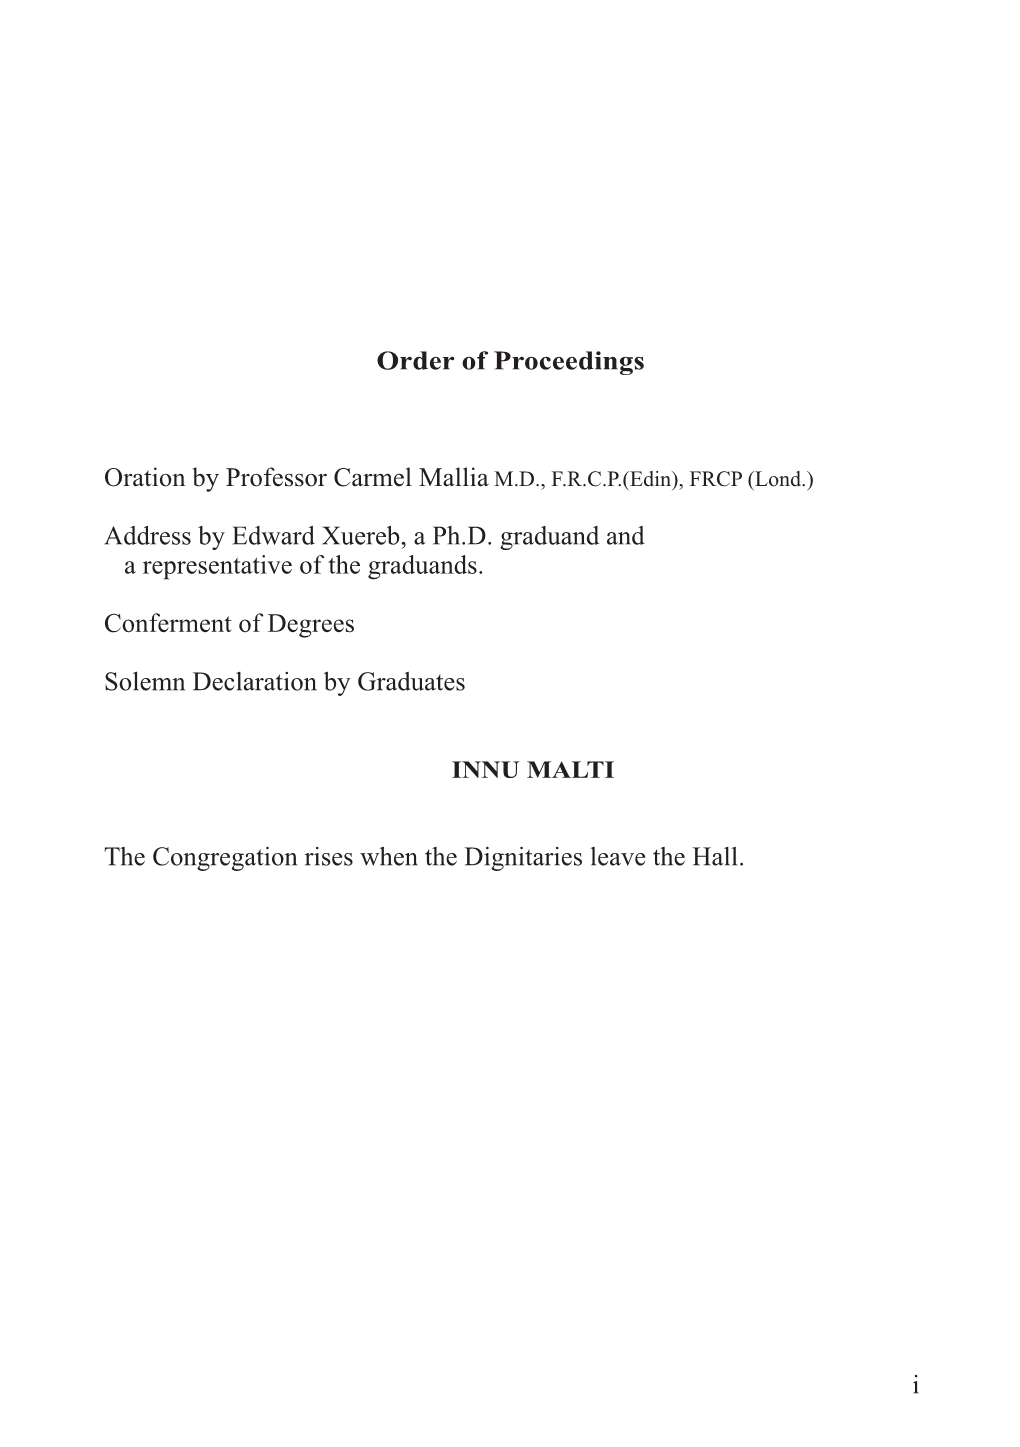 FRCP (Lond.) Address by Edward Xuereb, a Ph.D. G